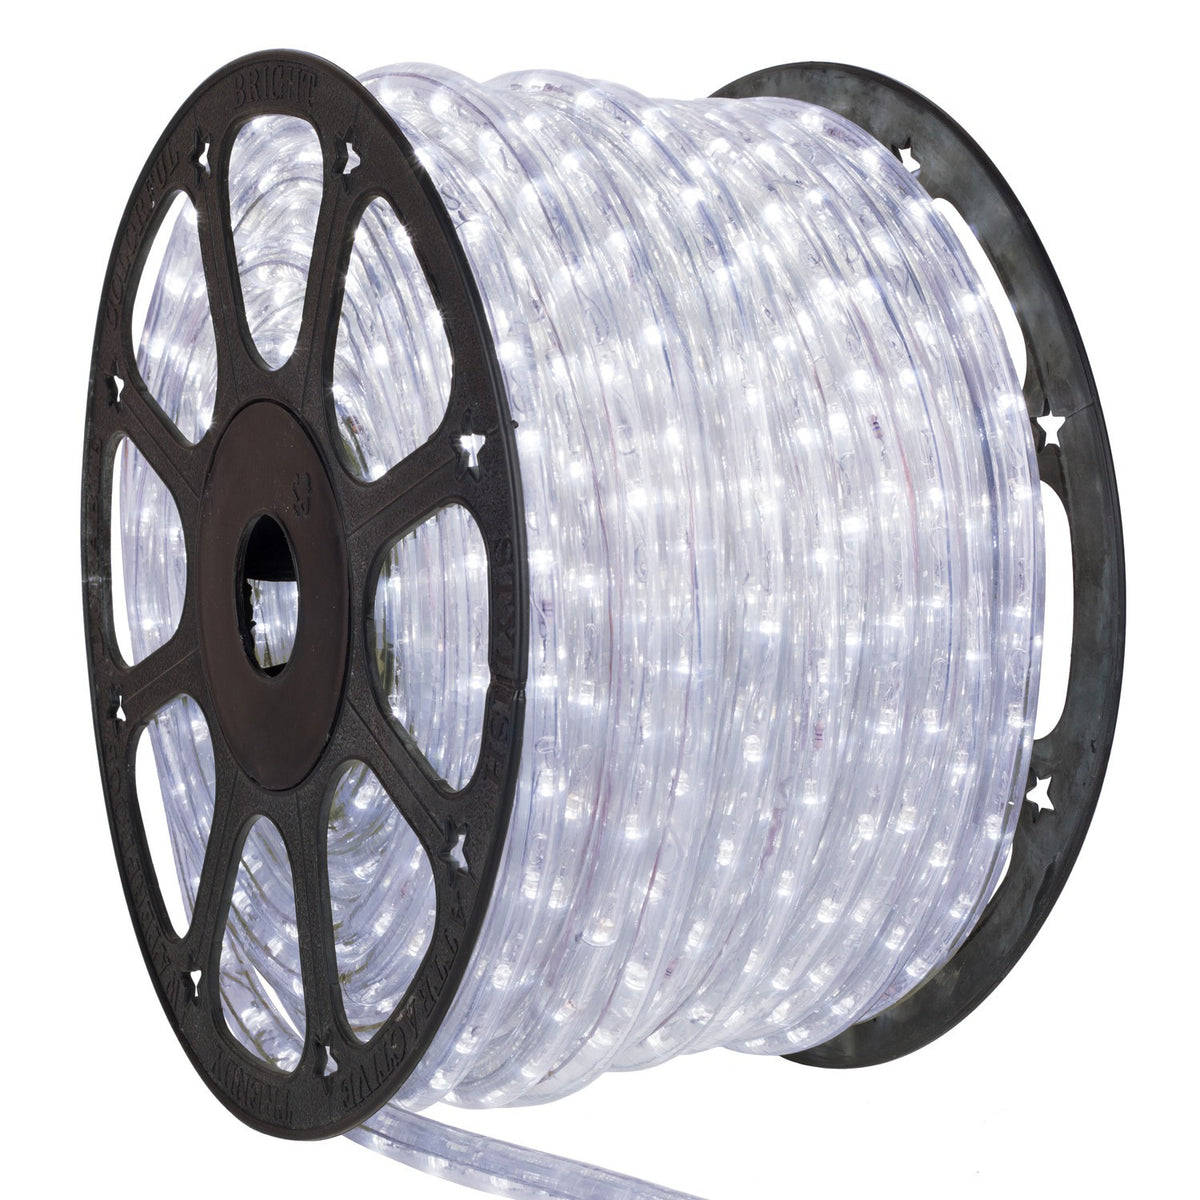 100FT Cool White LED Rope Light — LED Rope Lights Canada